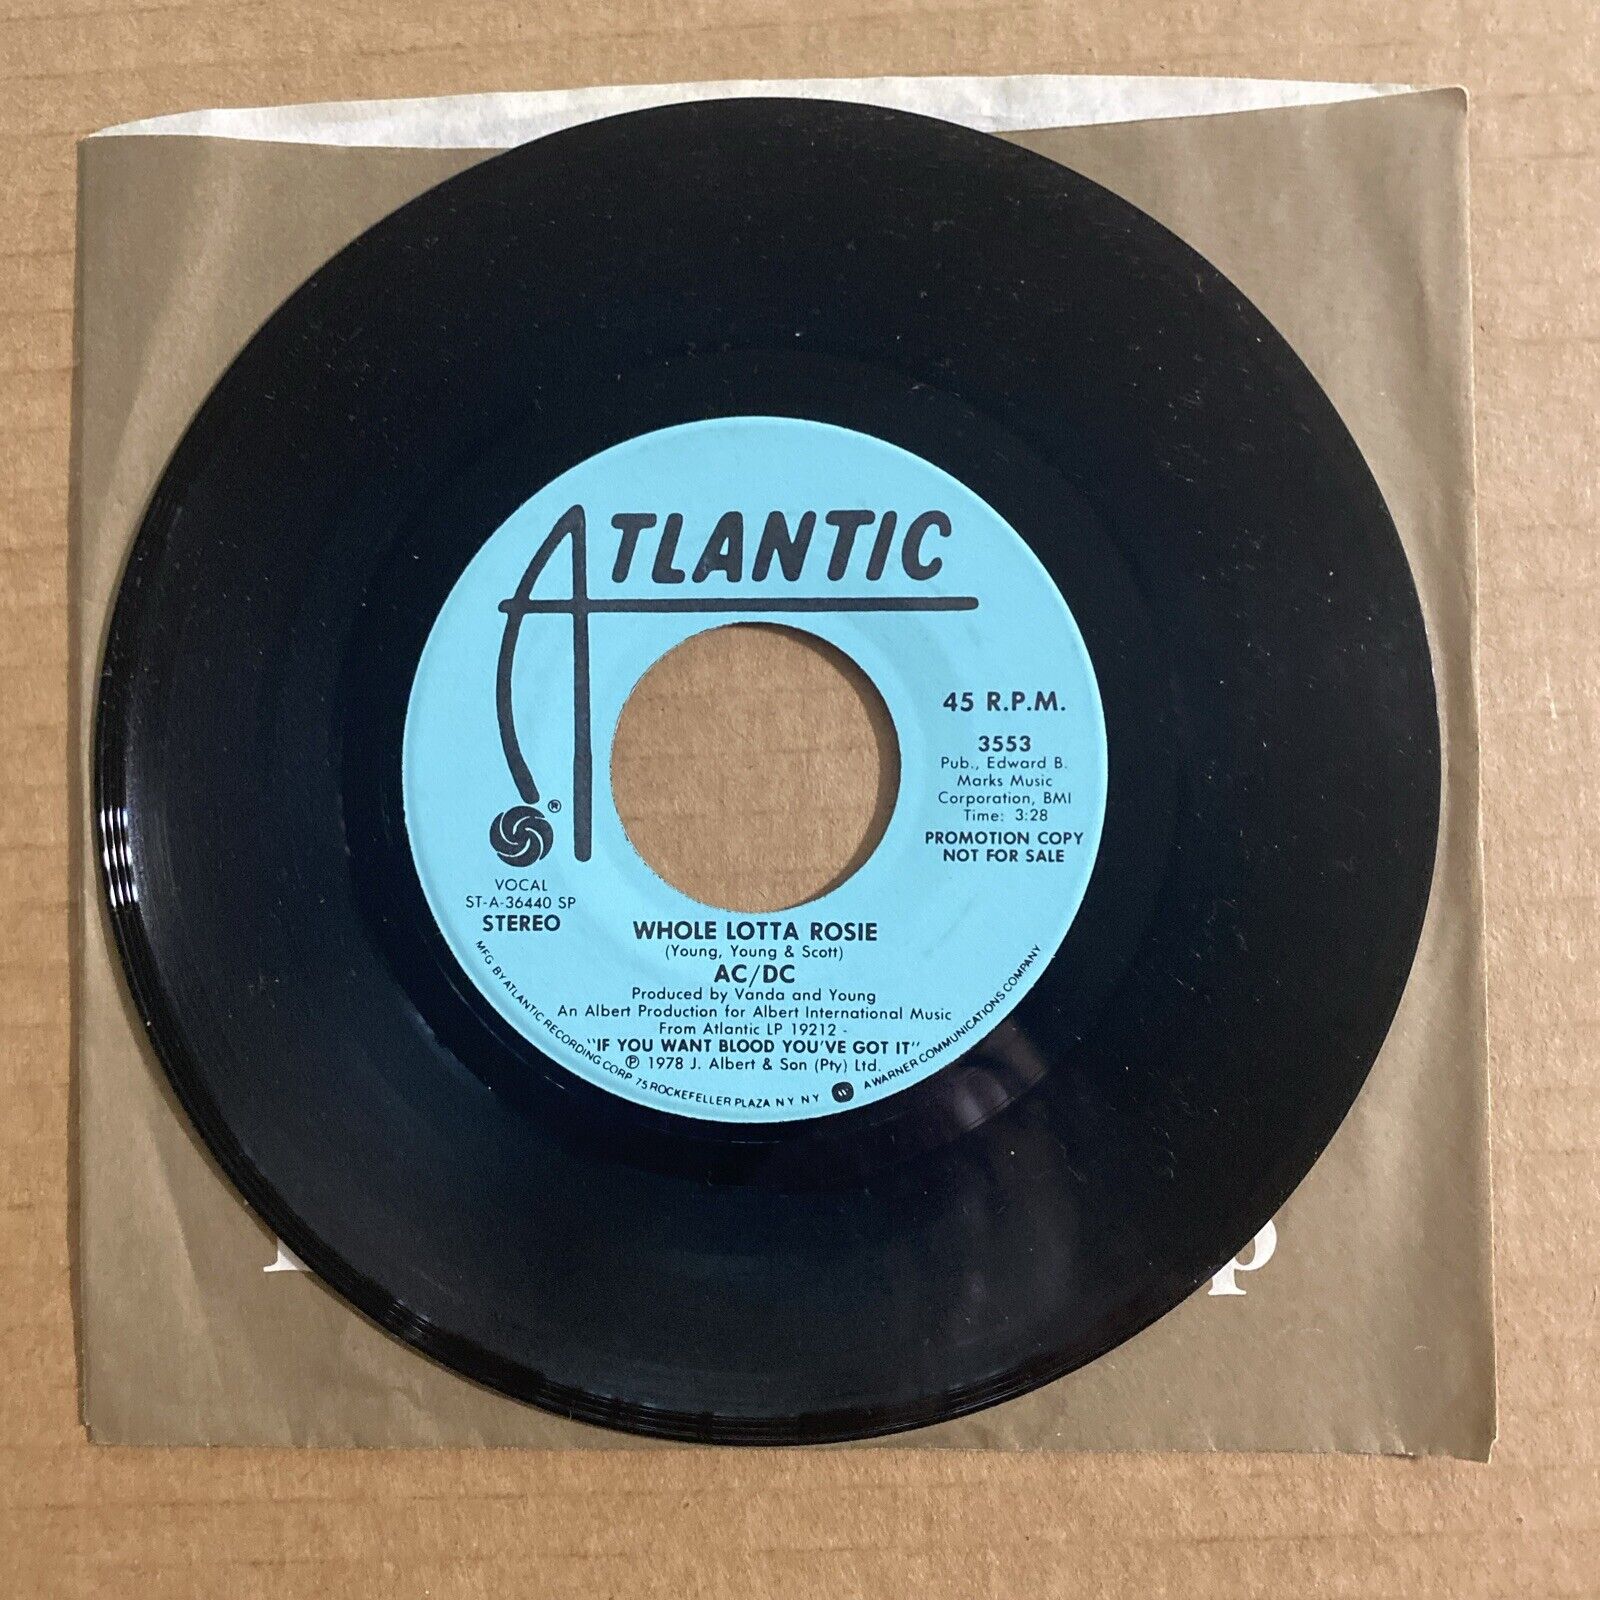 AC/DC - Whole Lotta Rosie - Used Promo 7" Single - US 1978 Atlantic - NM Vinyl